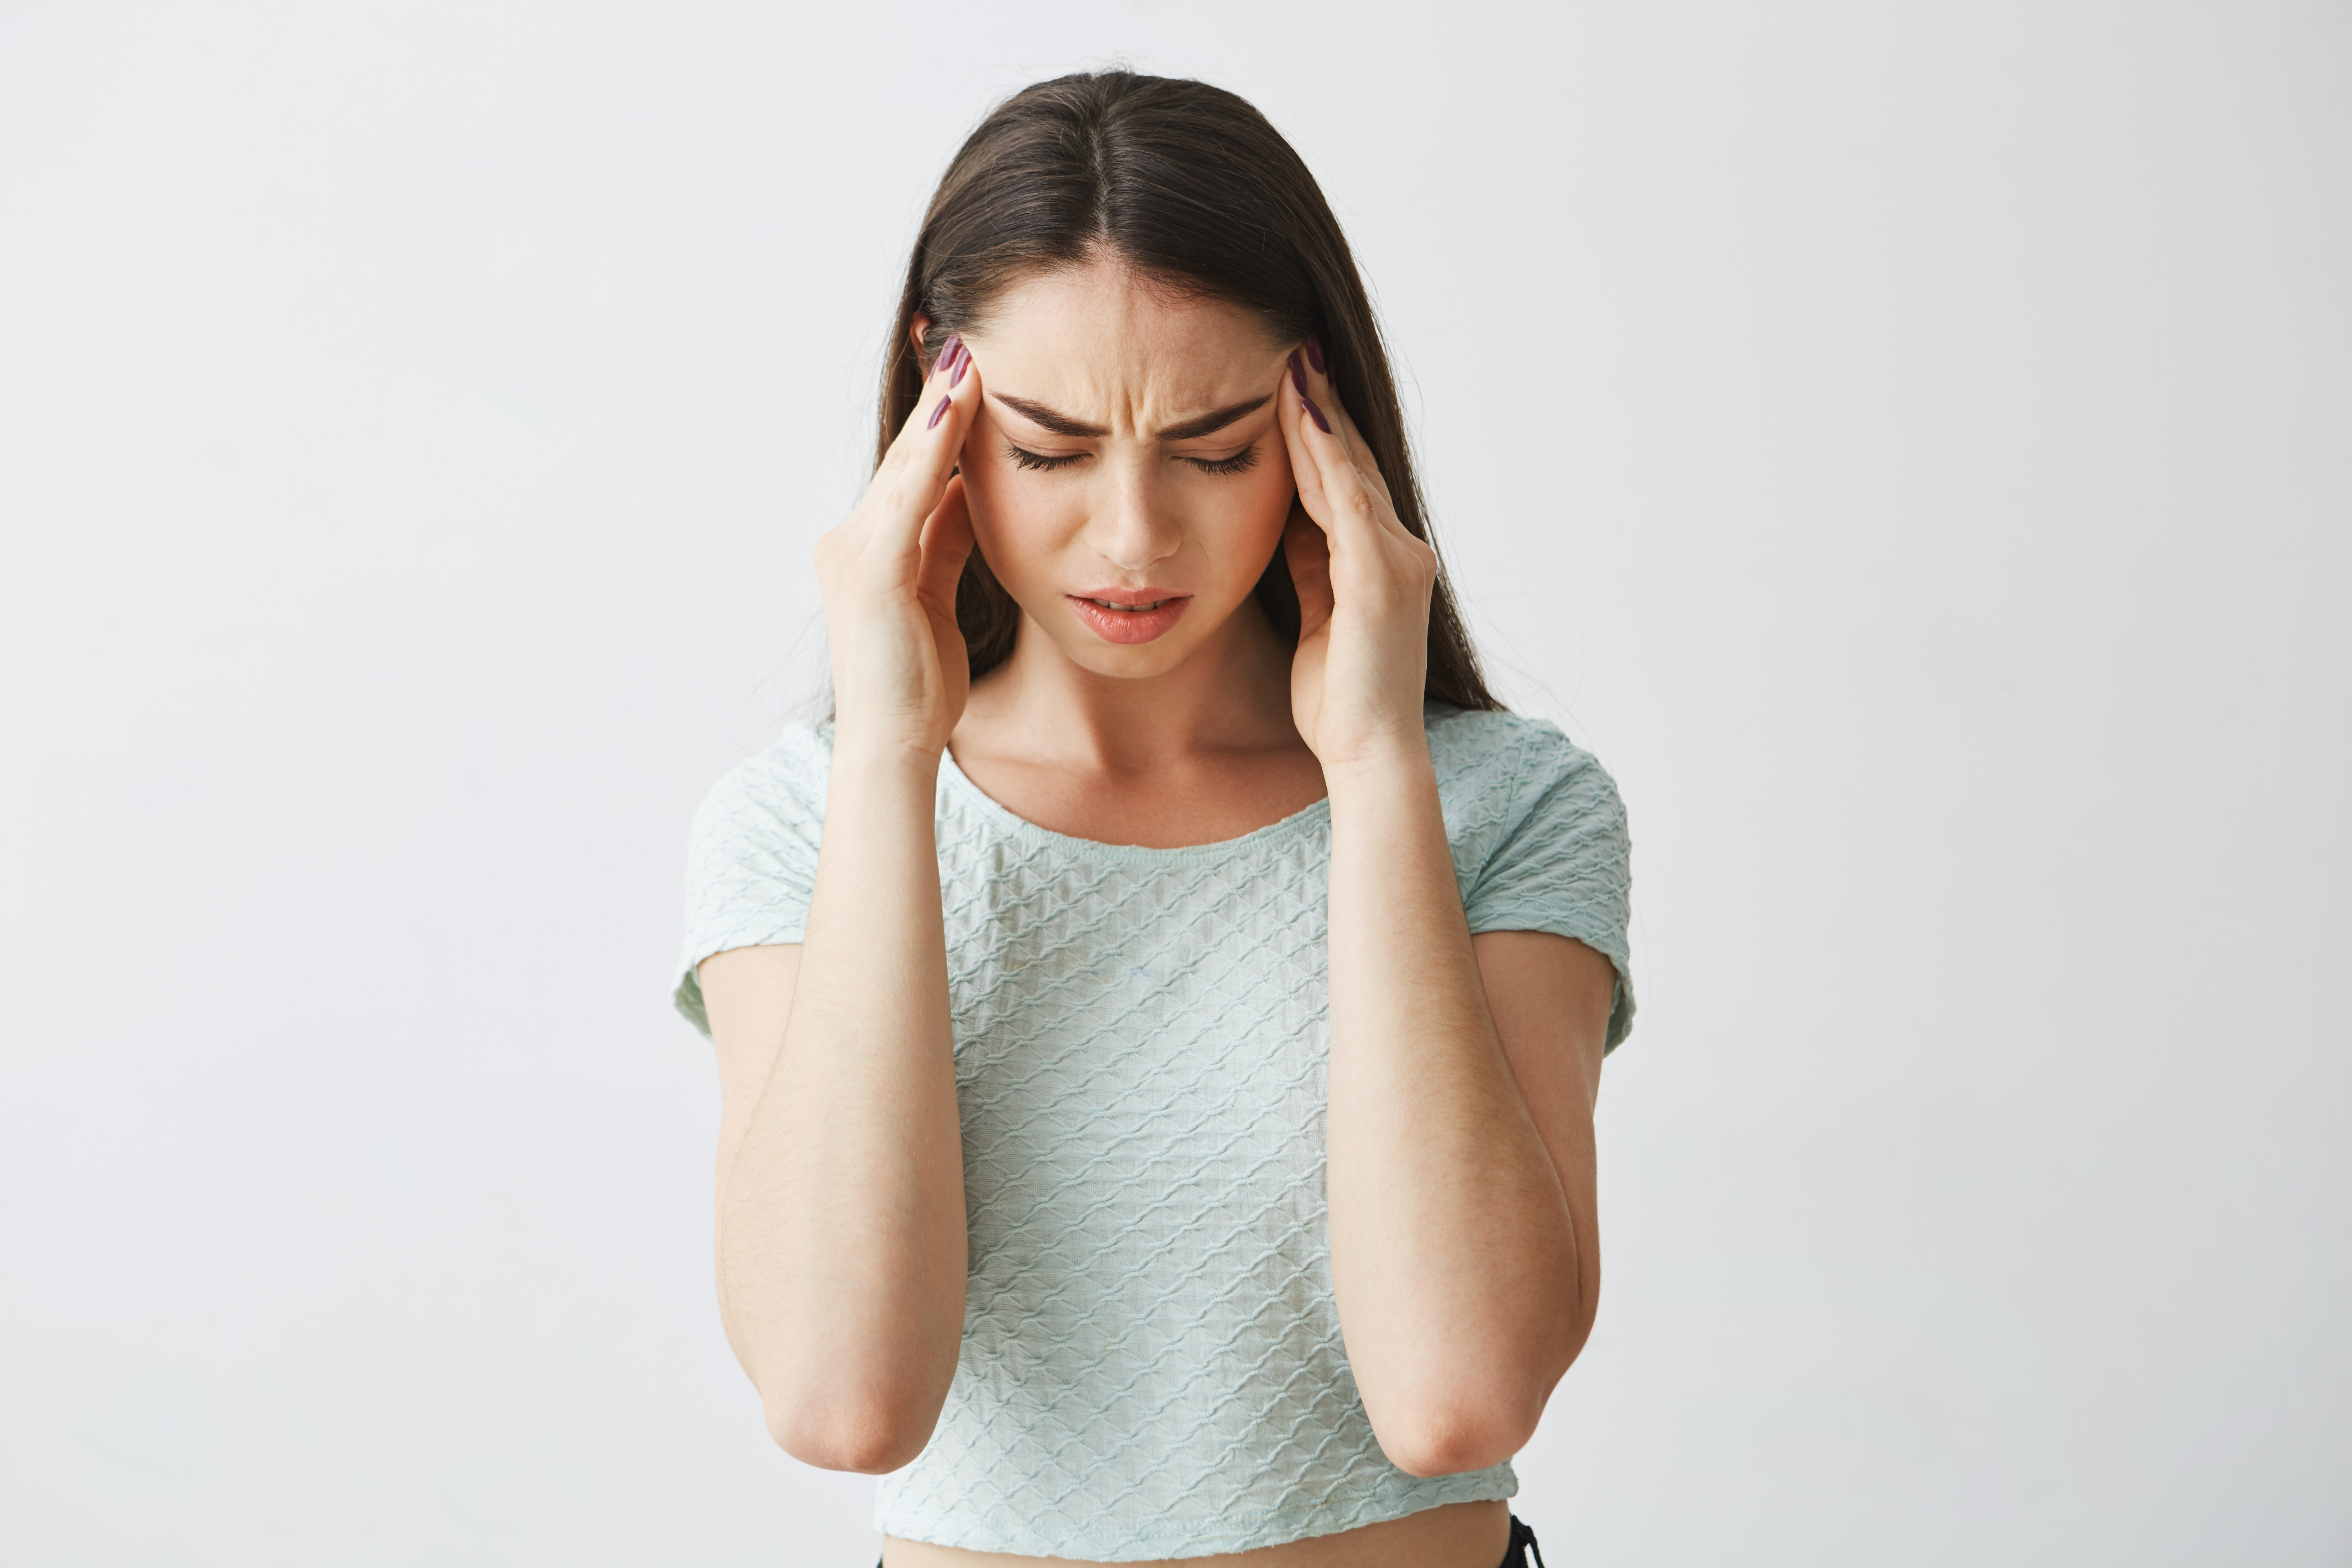 A Novel Treatment for Cluster Headaches?